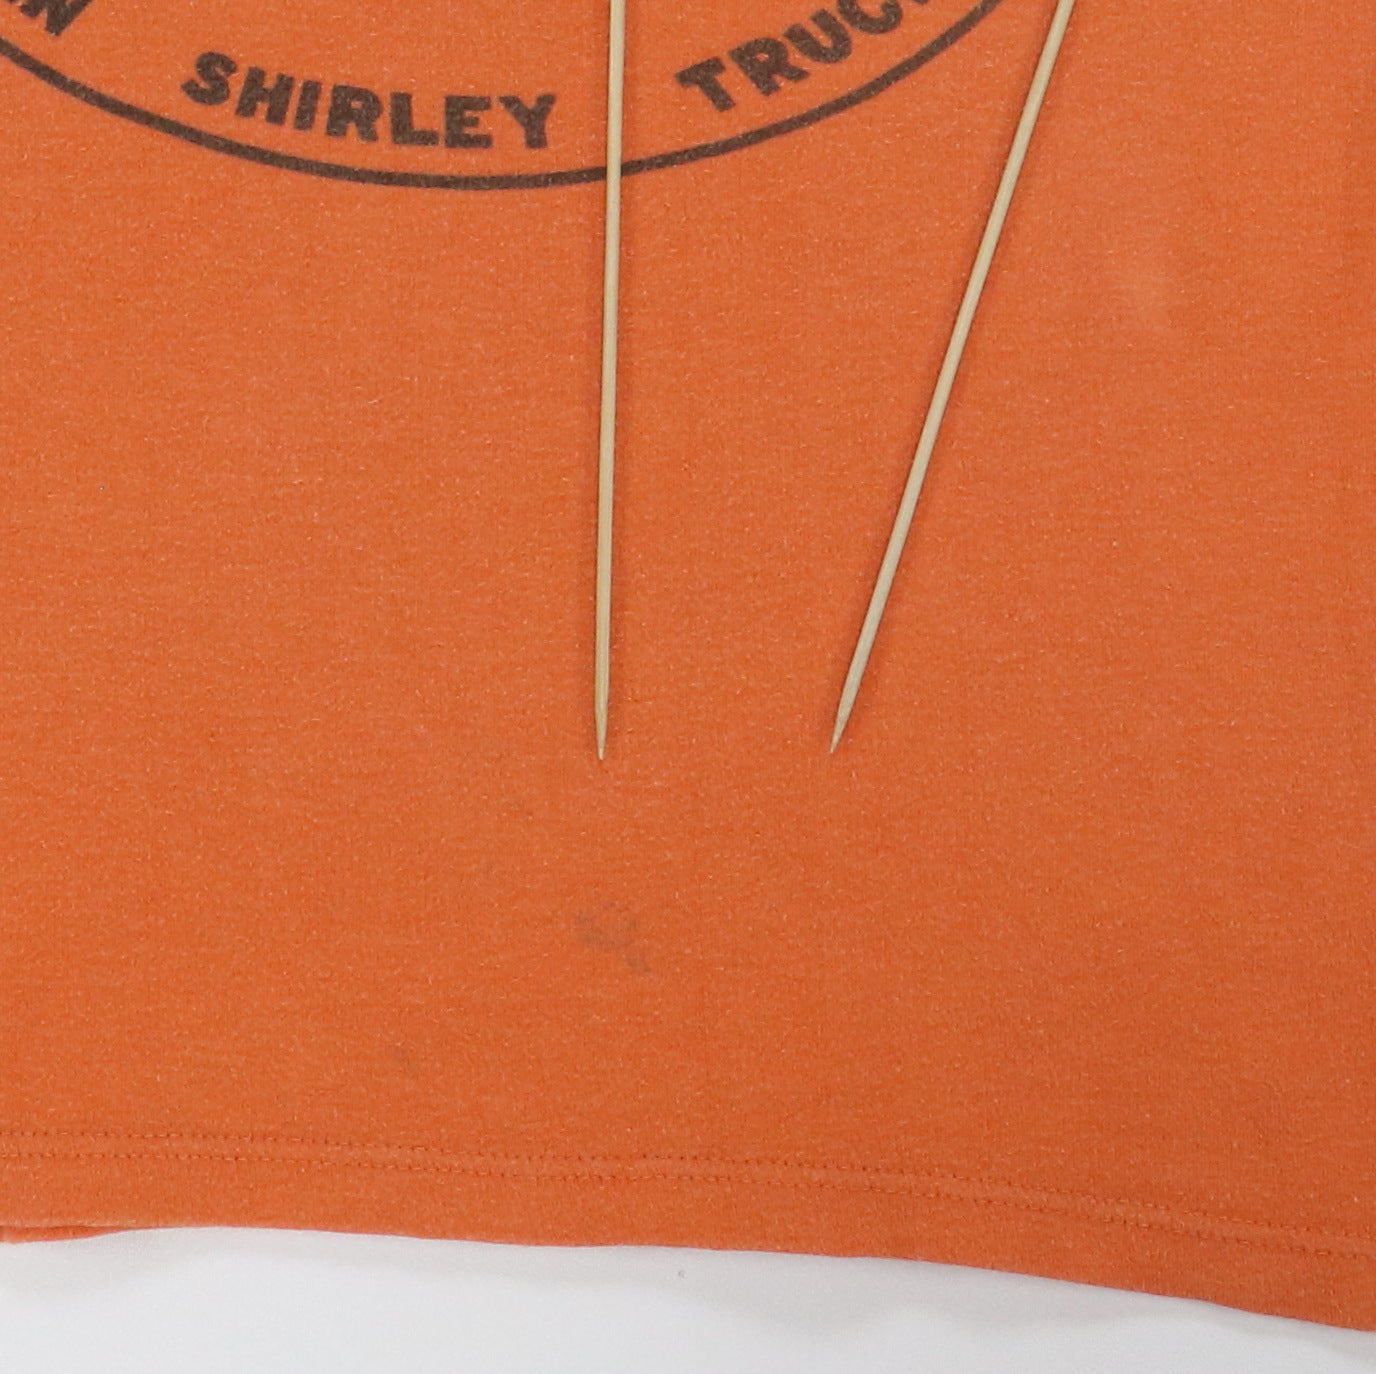 1970s Warner Brothers Music Shirley Vintage – Ediwn Shirt WyCo Trucking Show